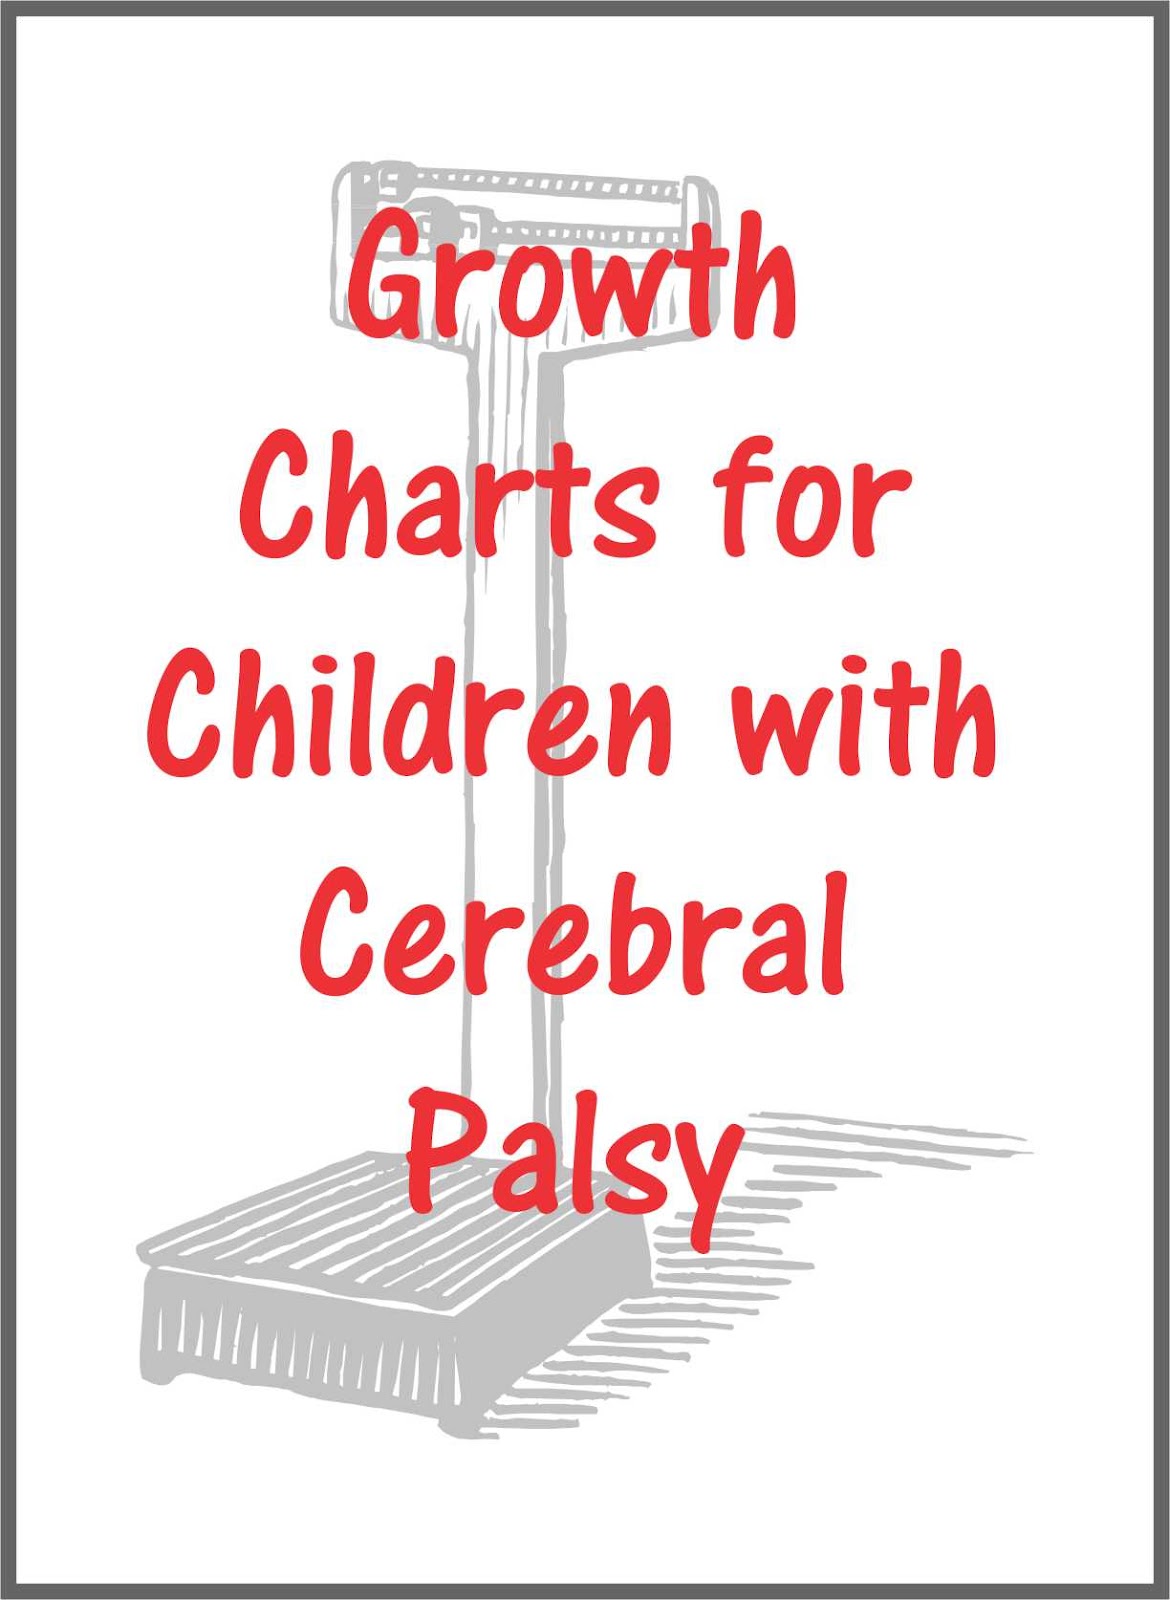 Cerebral Palsy New Growth Charts